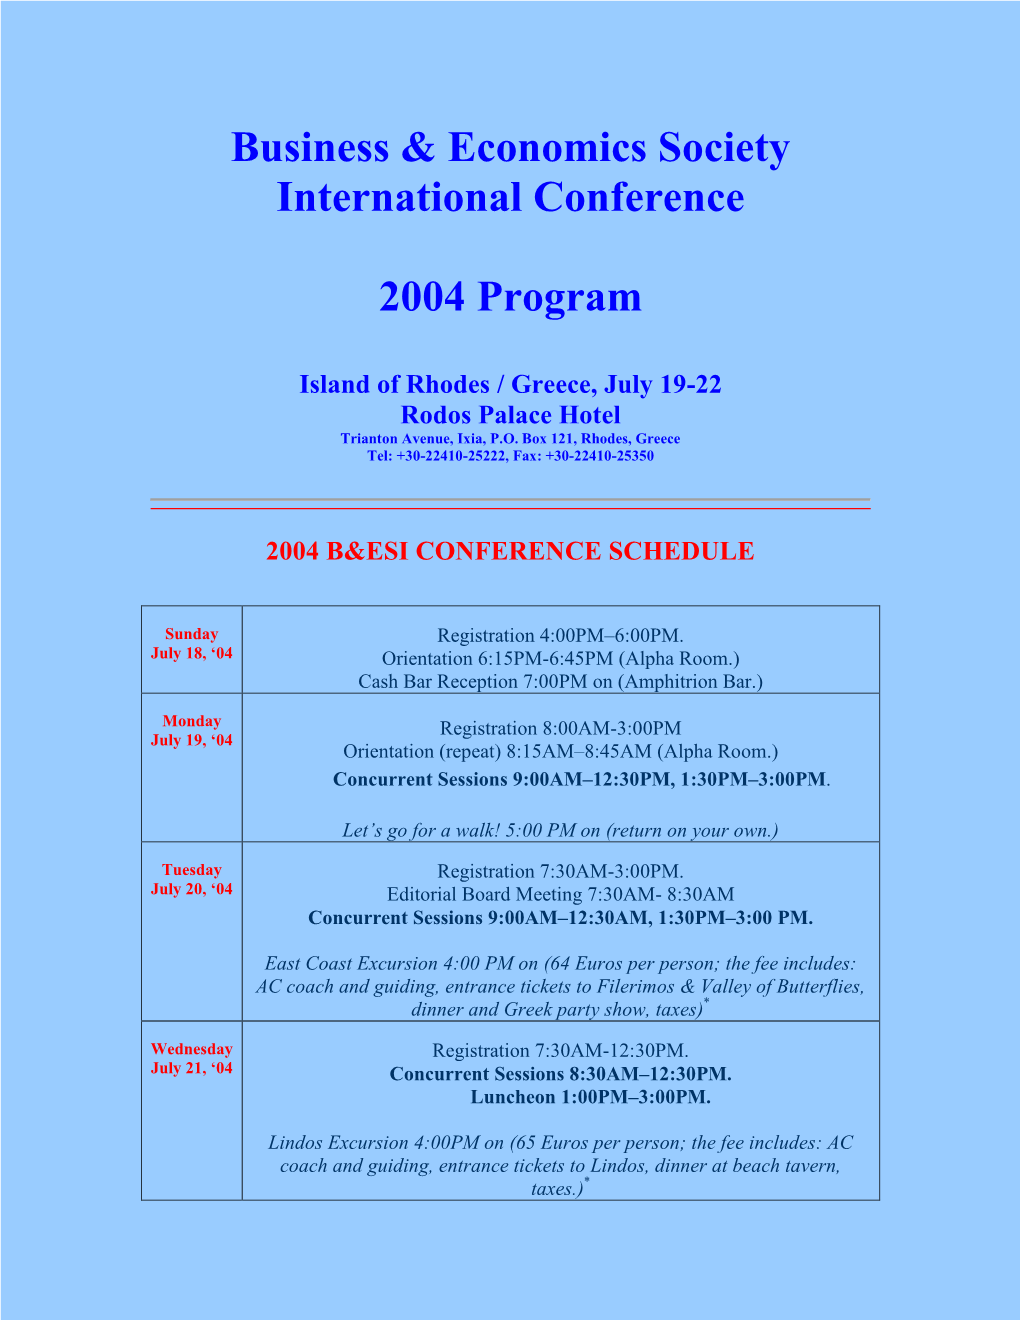 Business & Economics Society International Conference 2004 Program Island of Rhodes